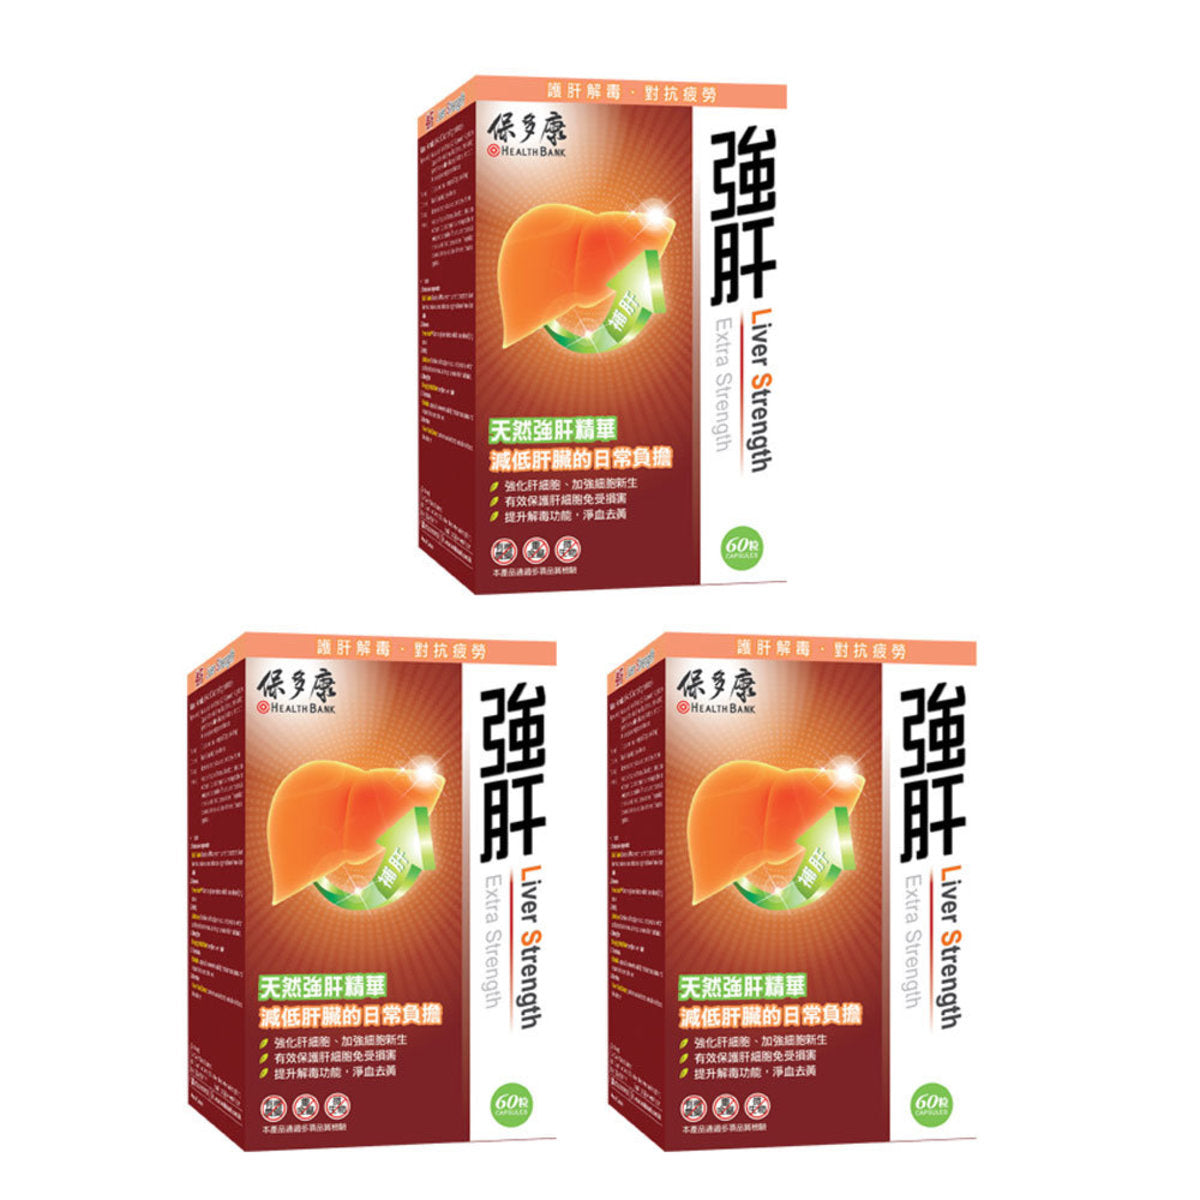 Baotokang - Strong Liver (60 capsules) 3 boxes